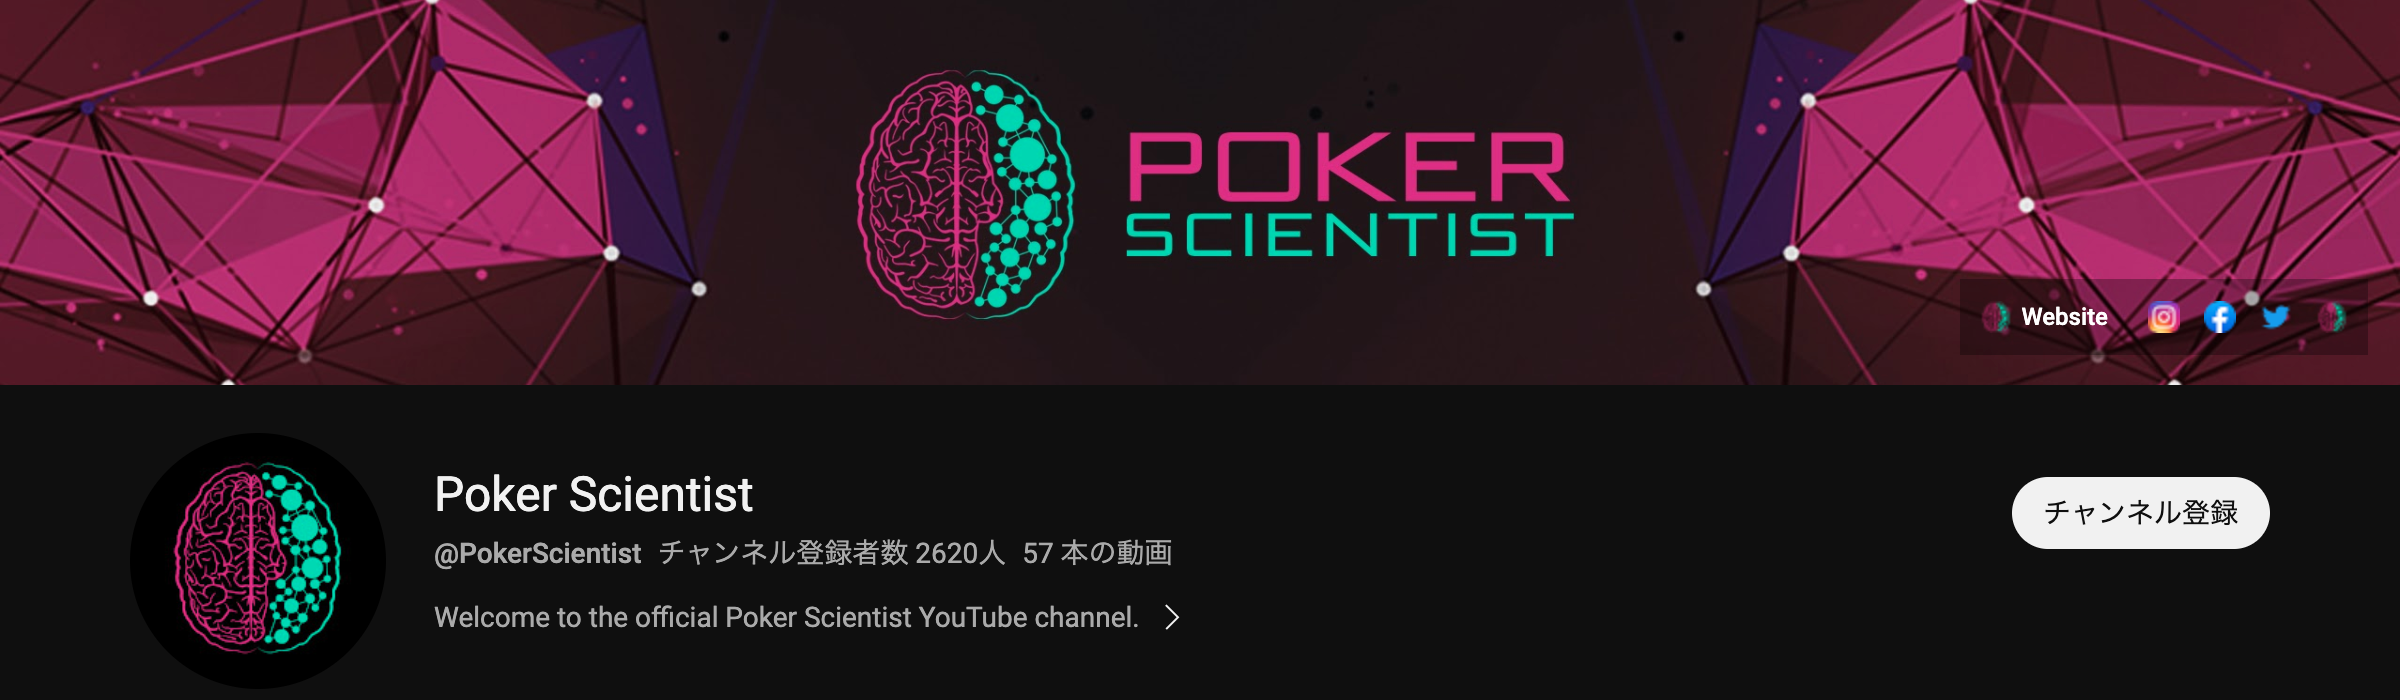 POKER SCIENTIST YouTubeチャンネル